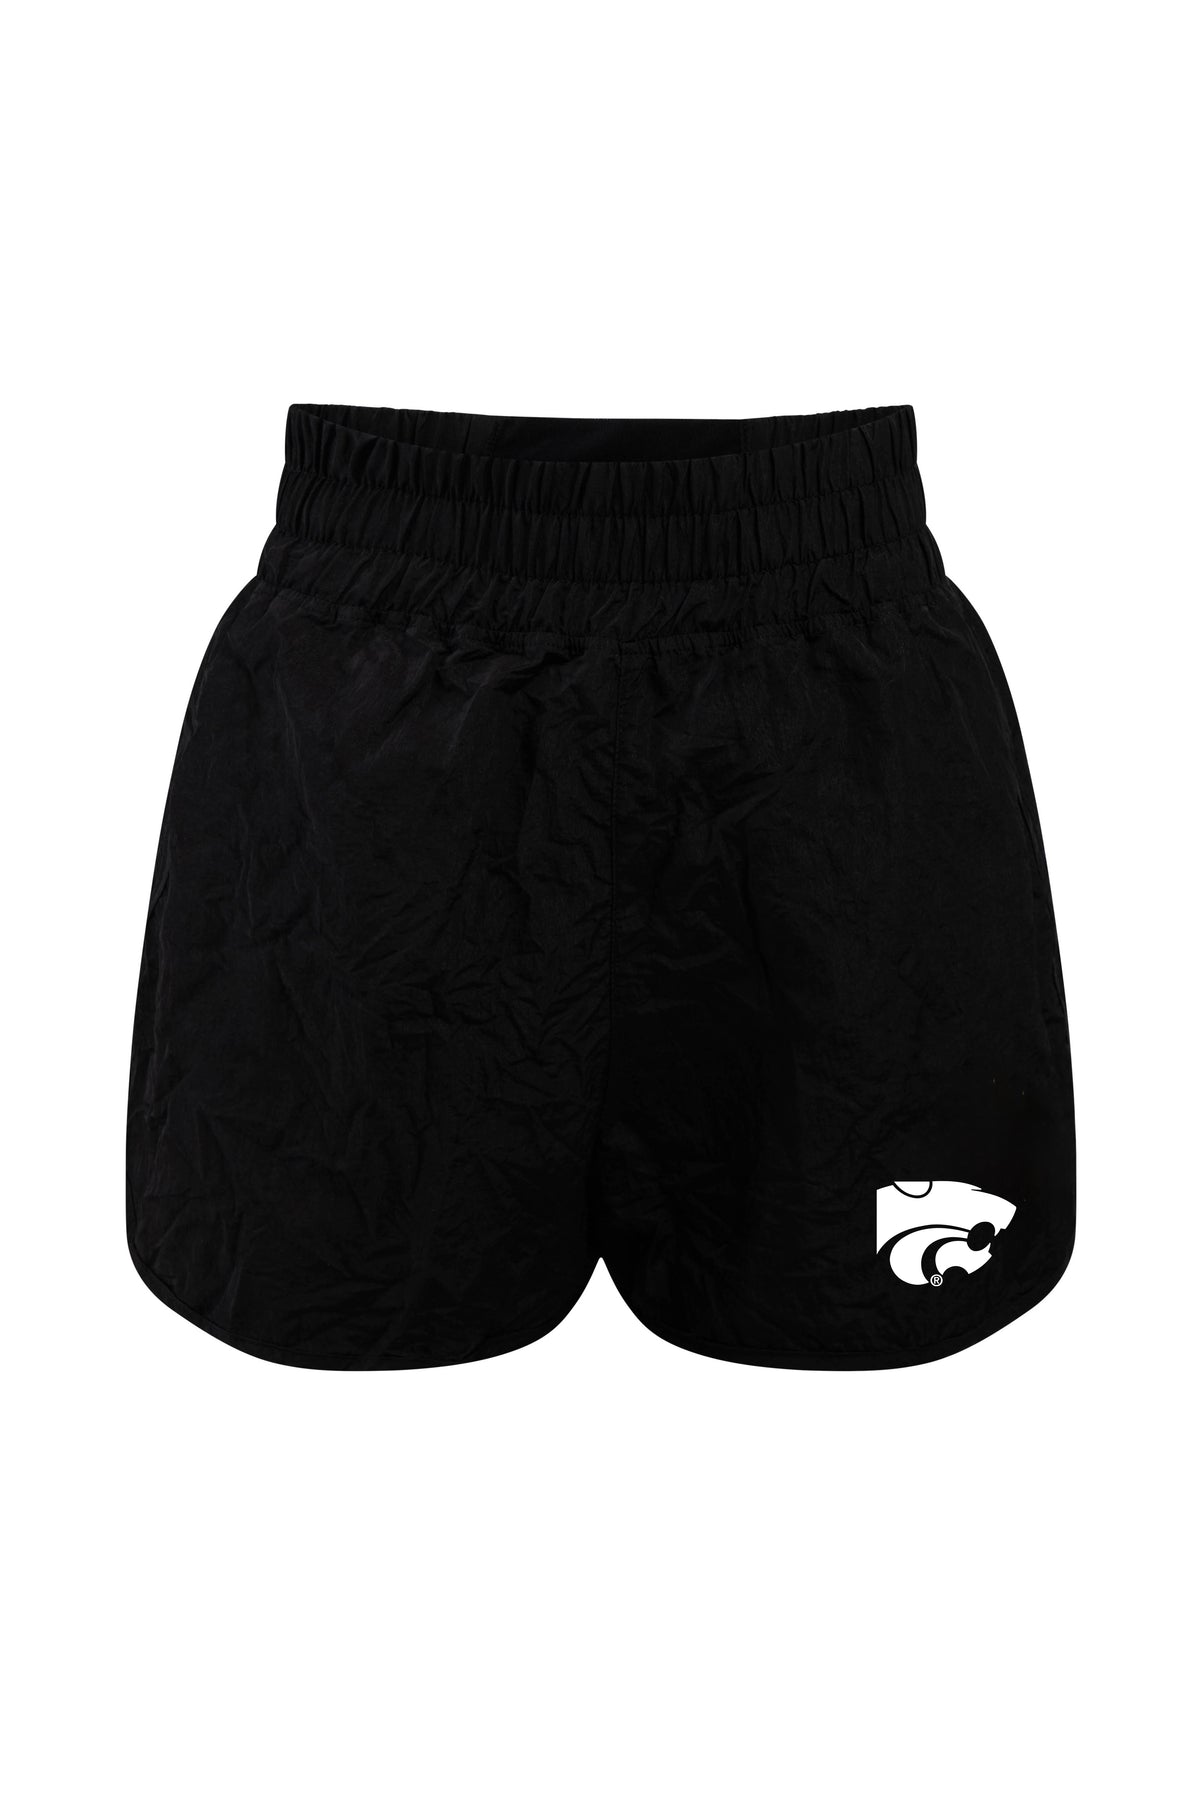 Kansas State University Boxer Short